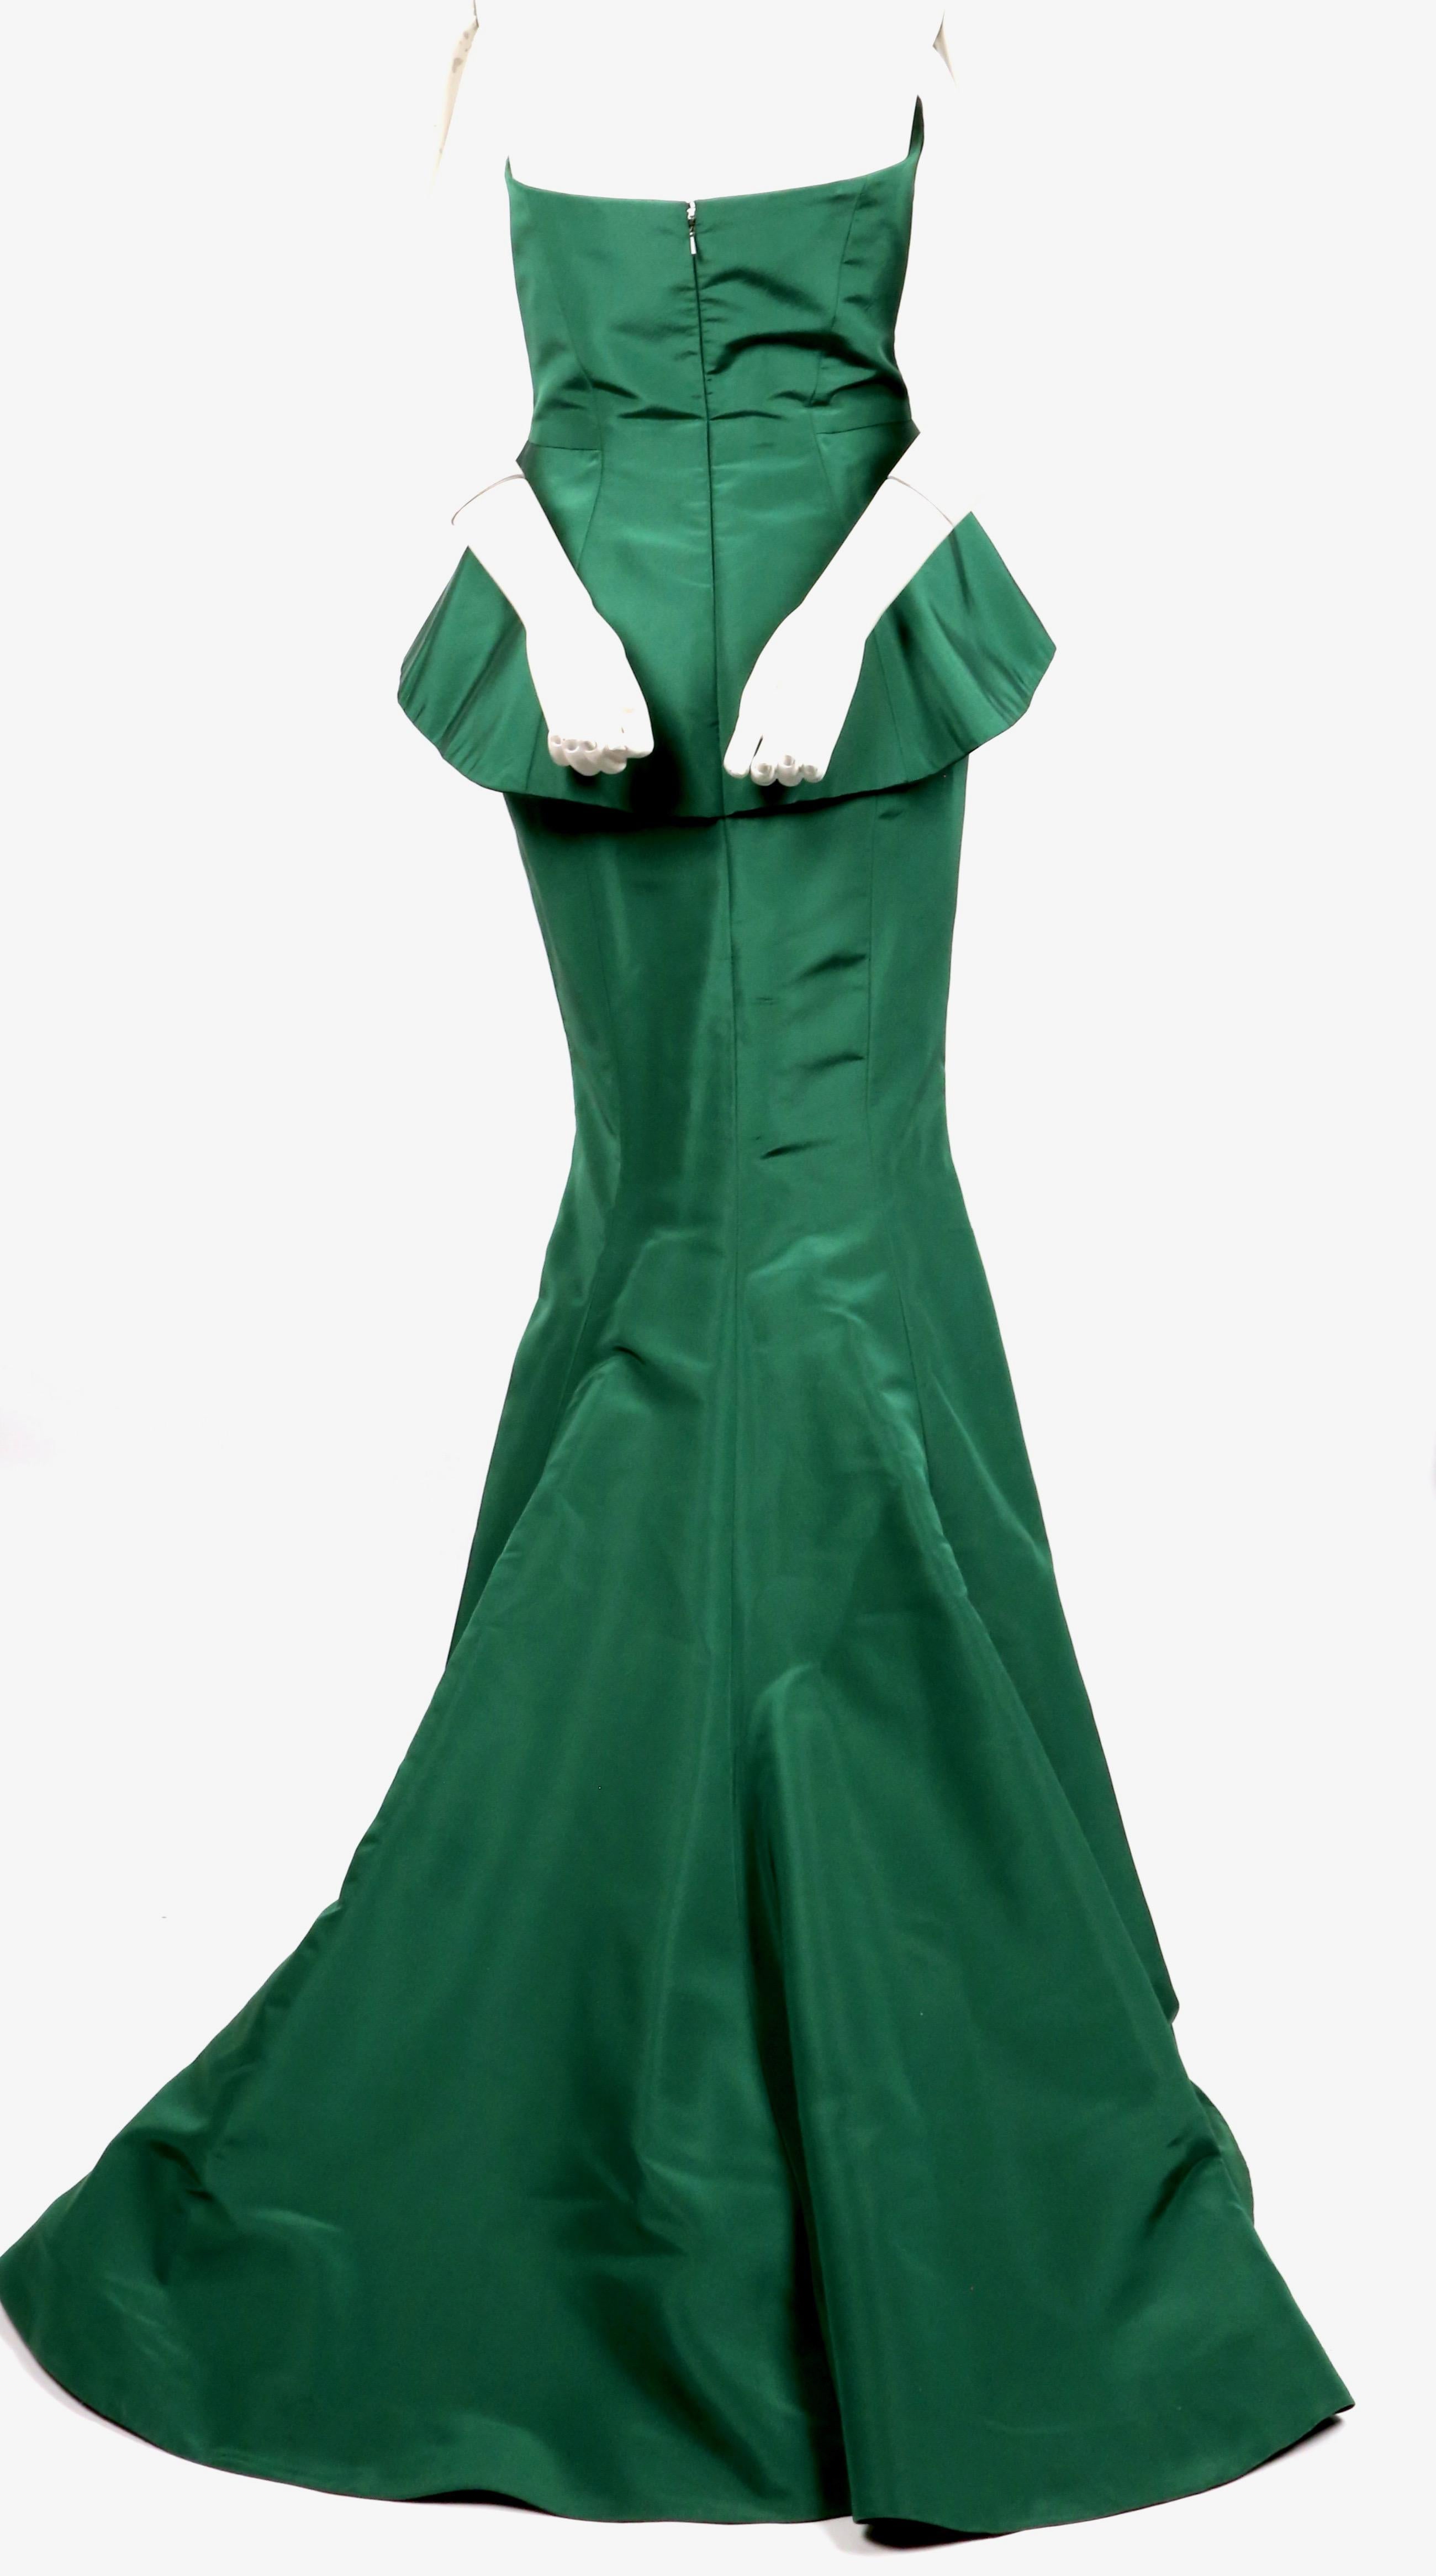 Green OSCAR DE LA RENTA emerald green silk runway gown with pleated bodice & train